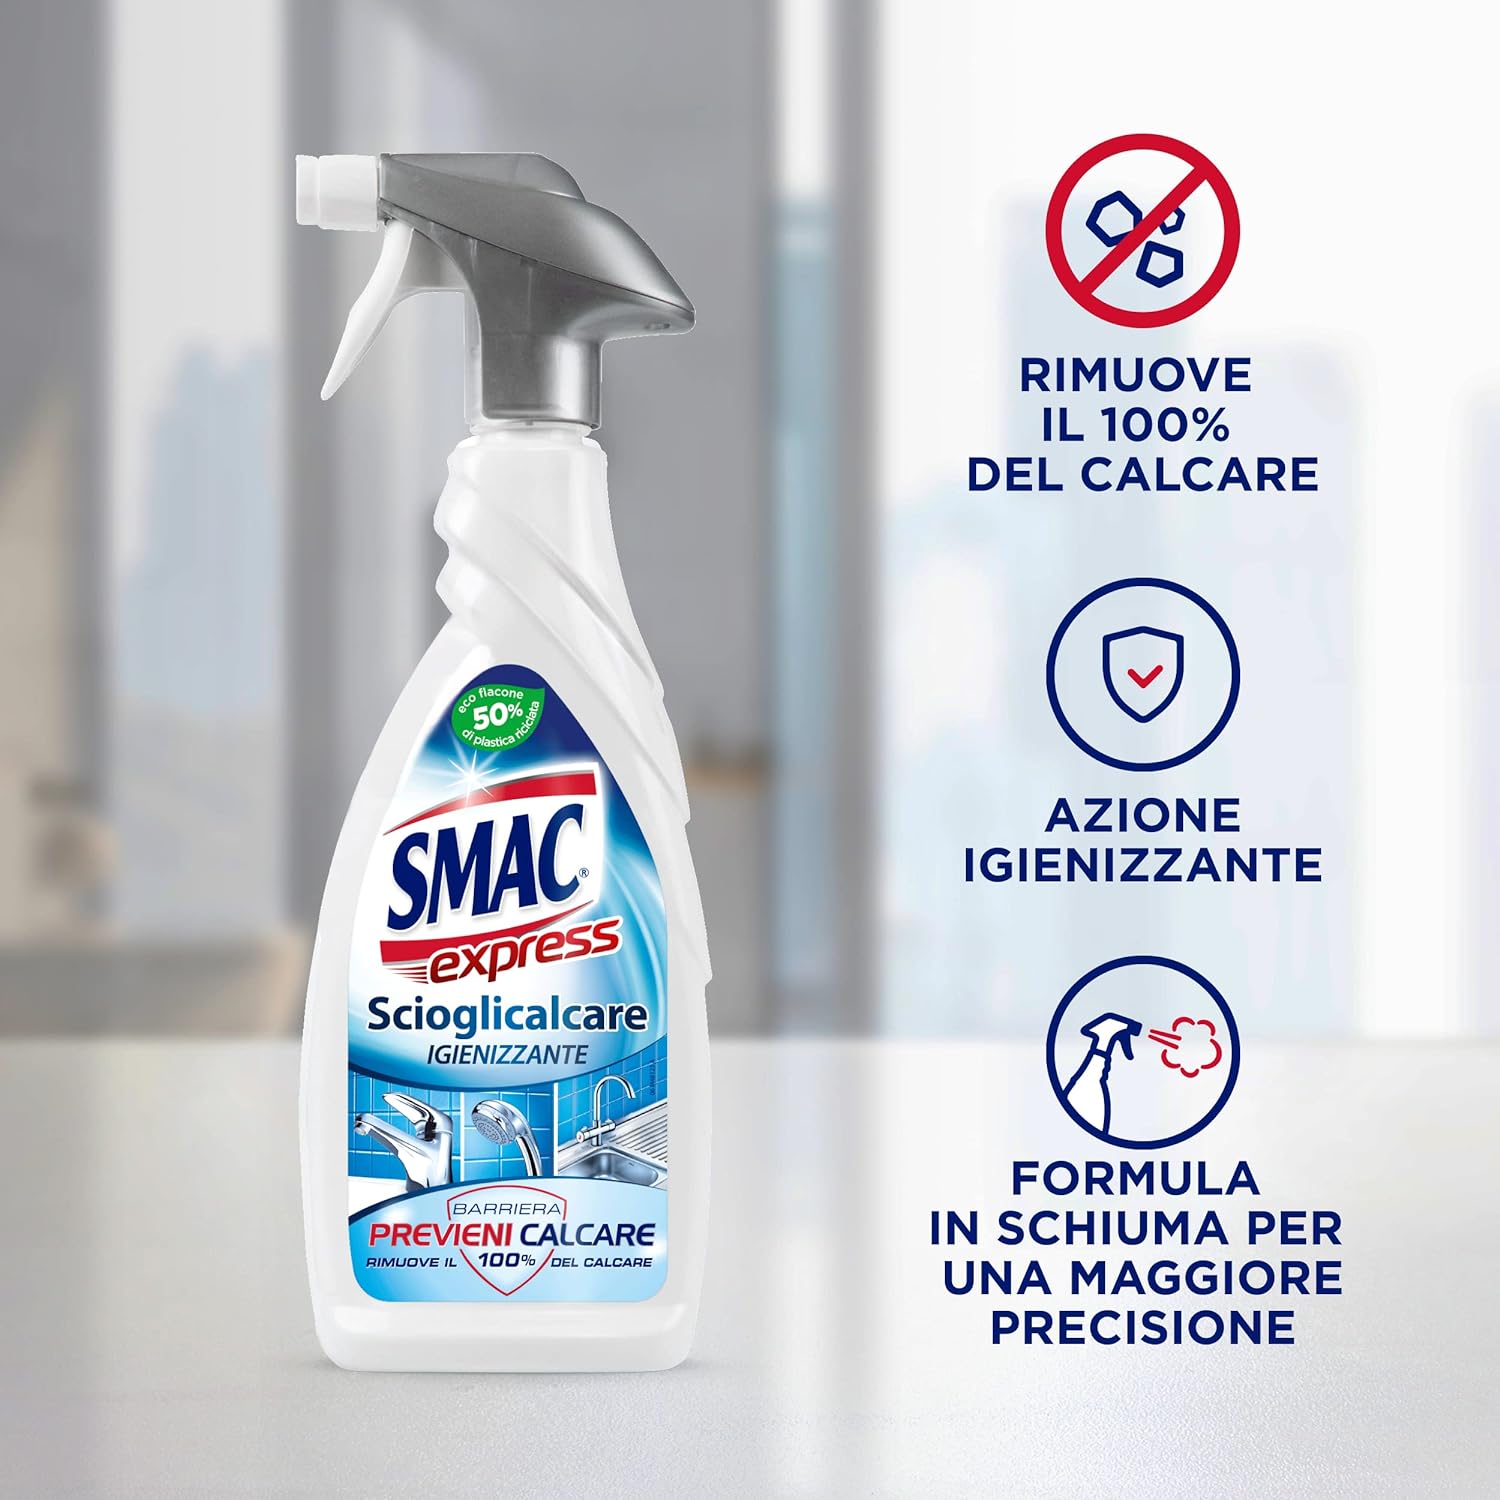 3 x 650 ml Smac Express Scioglicalcare Igienizzante Spray Detergente A